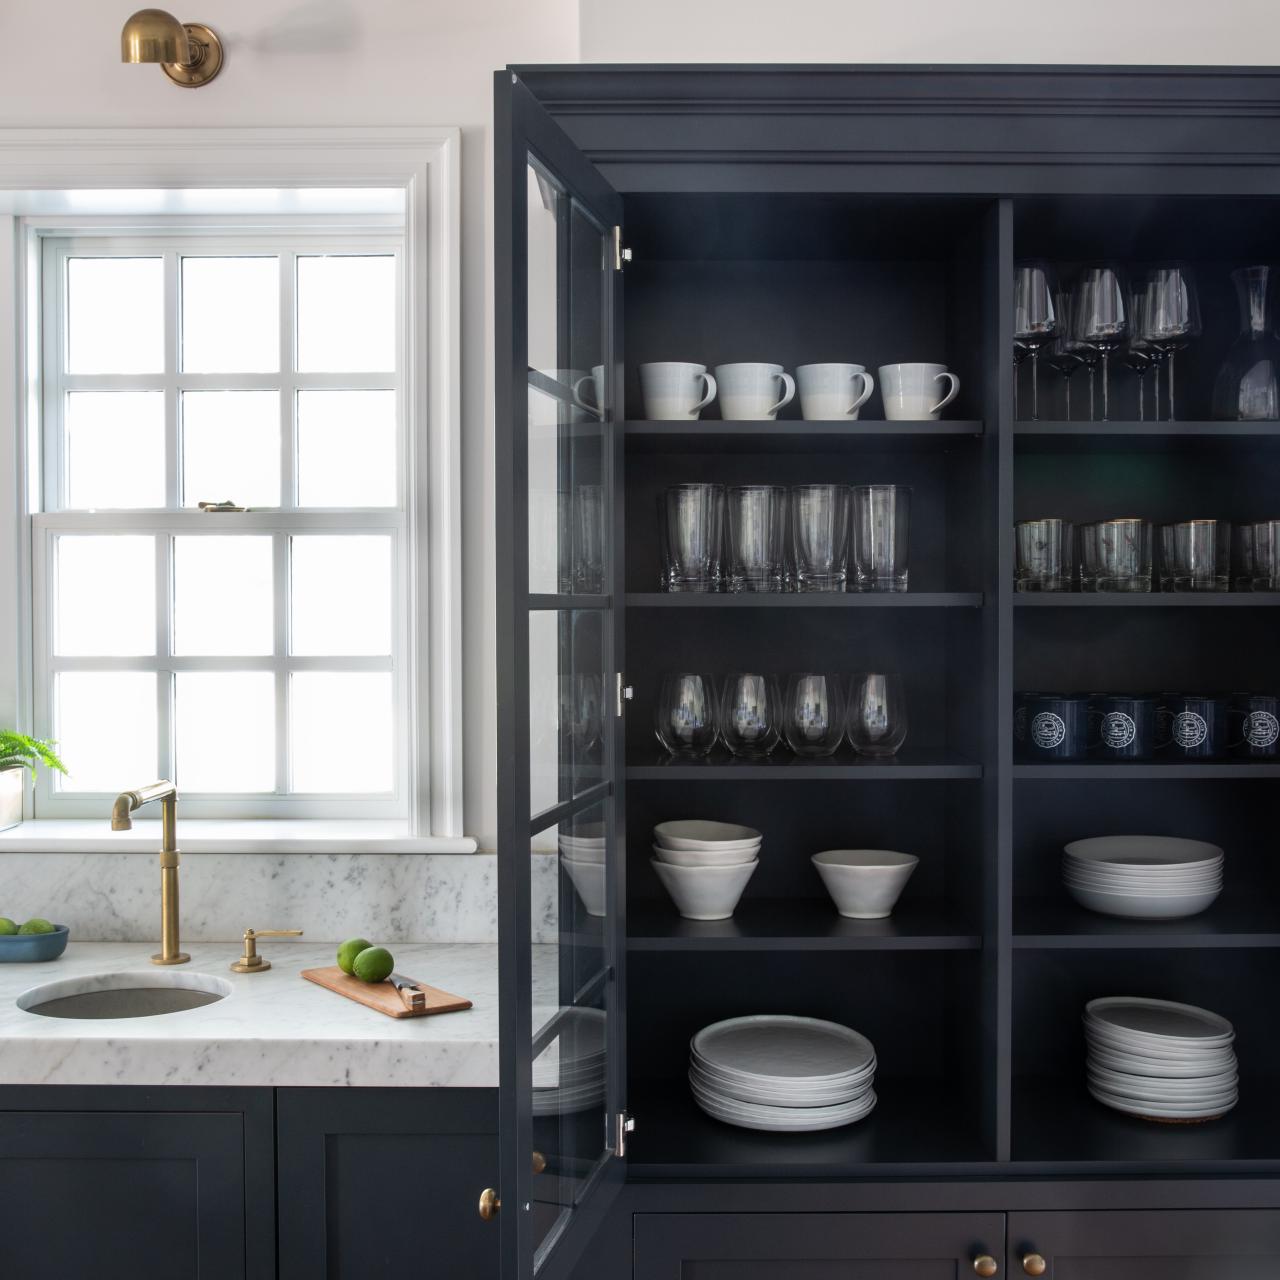 The 25 Best Kitchen Storage Ideas for an Organized Space